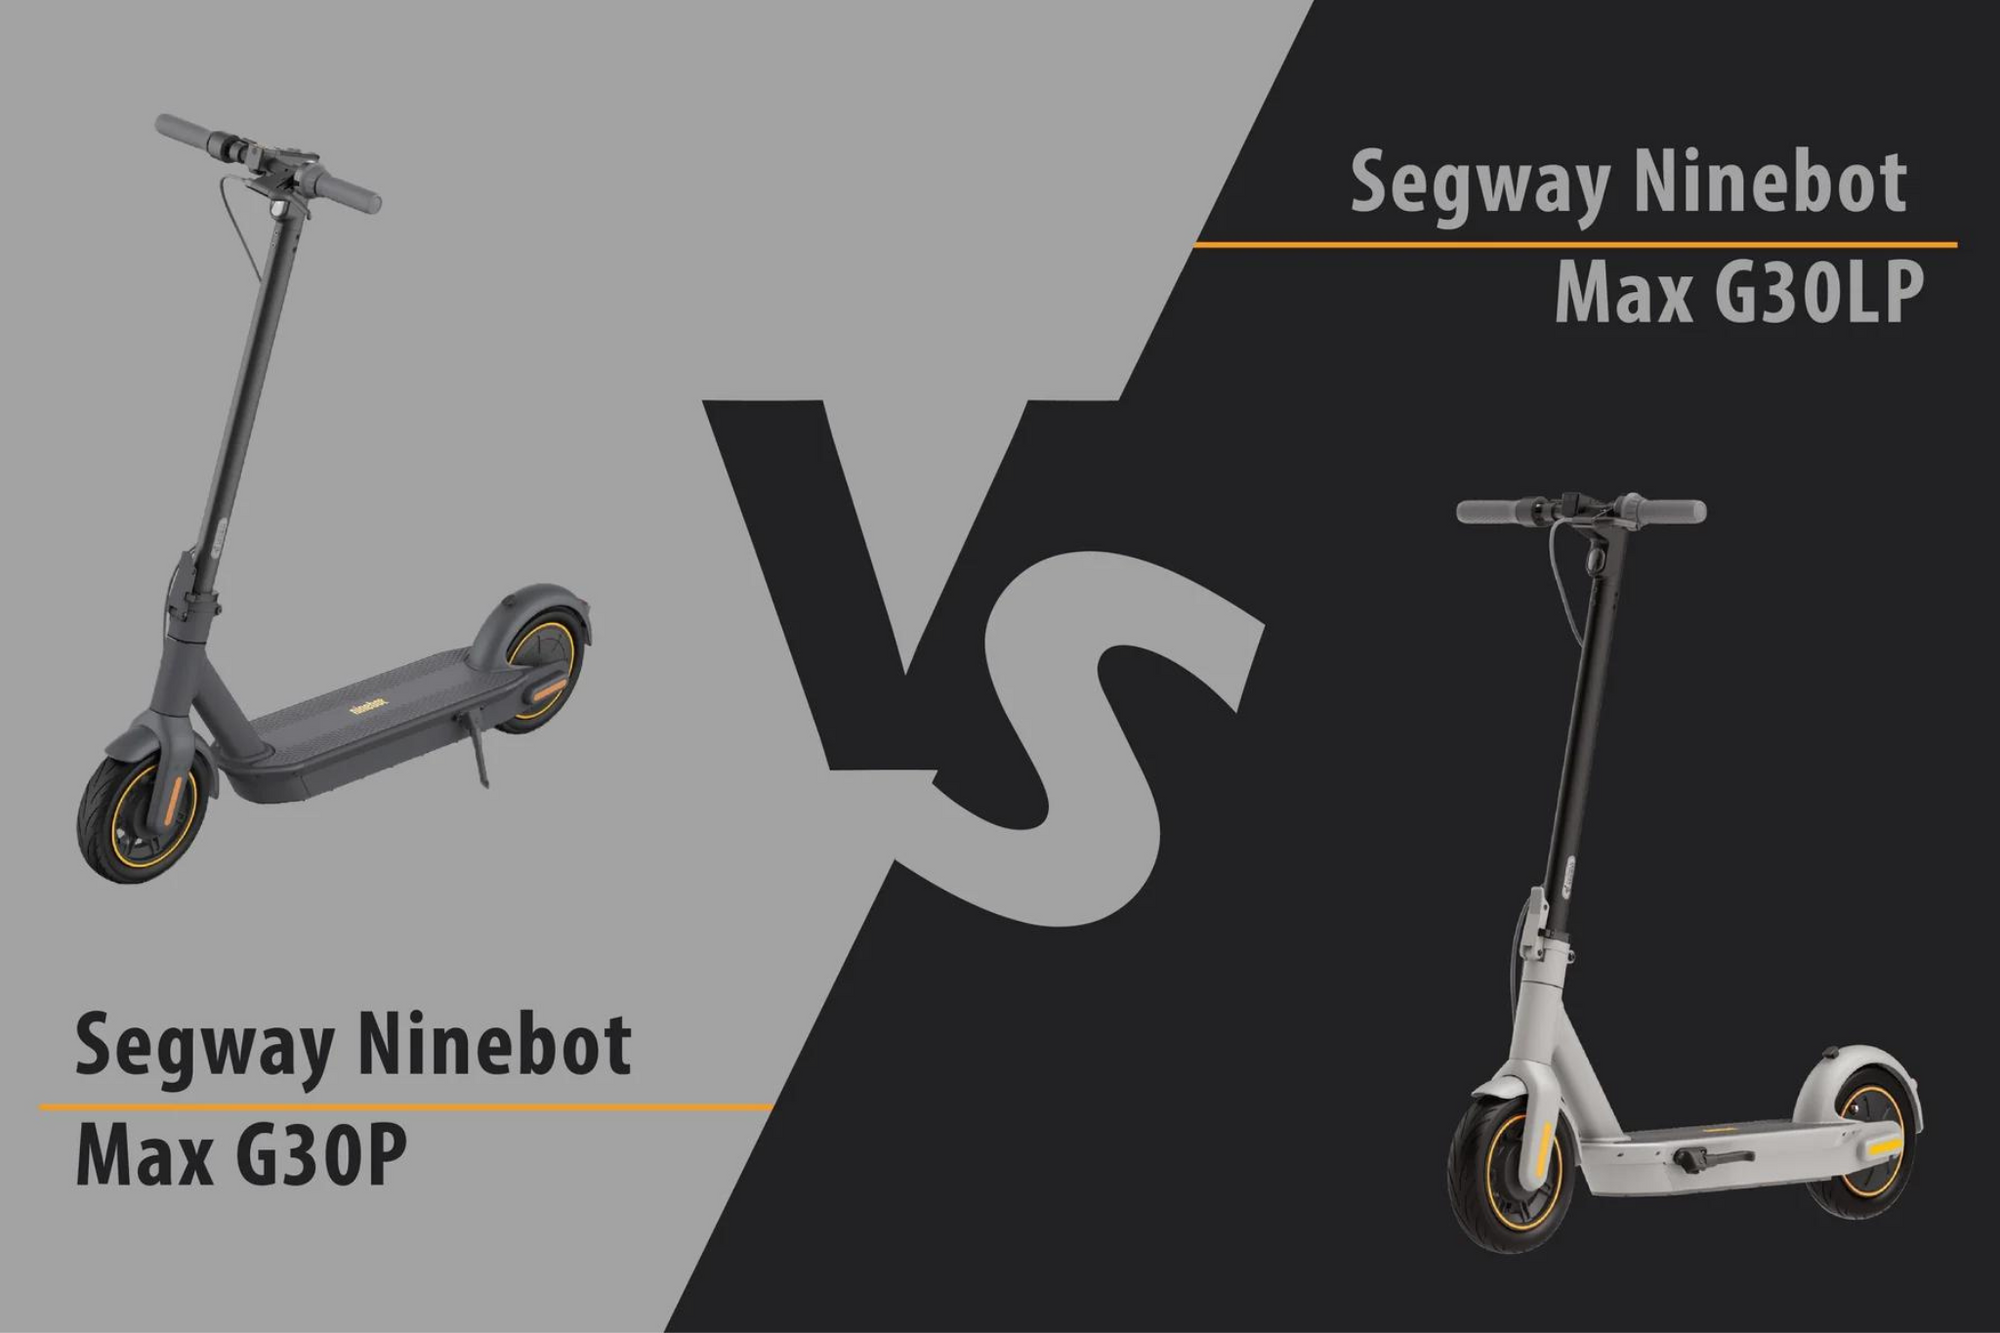 Segway Ninebot G30P vs G30LP